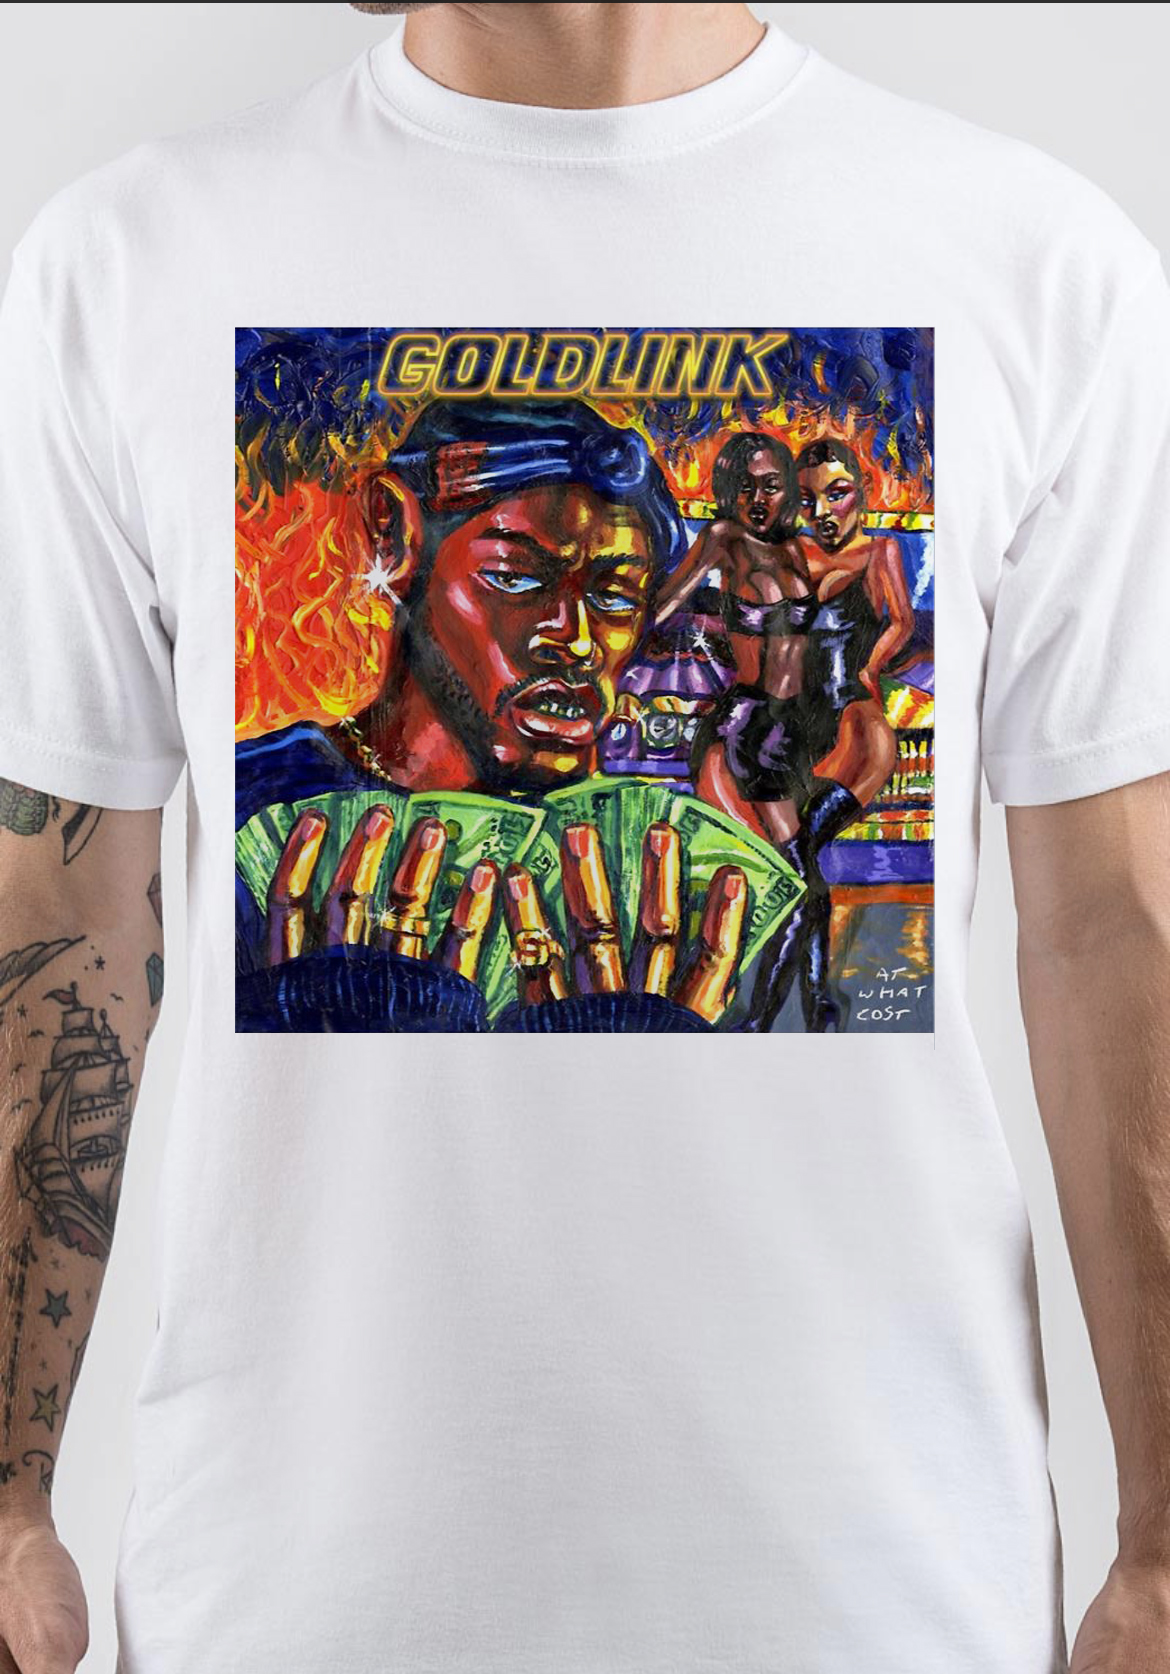 GoldLink T-Shirt And Merchandise